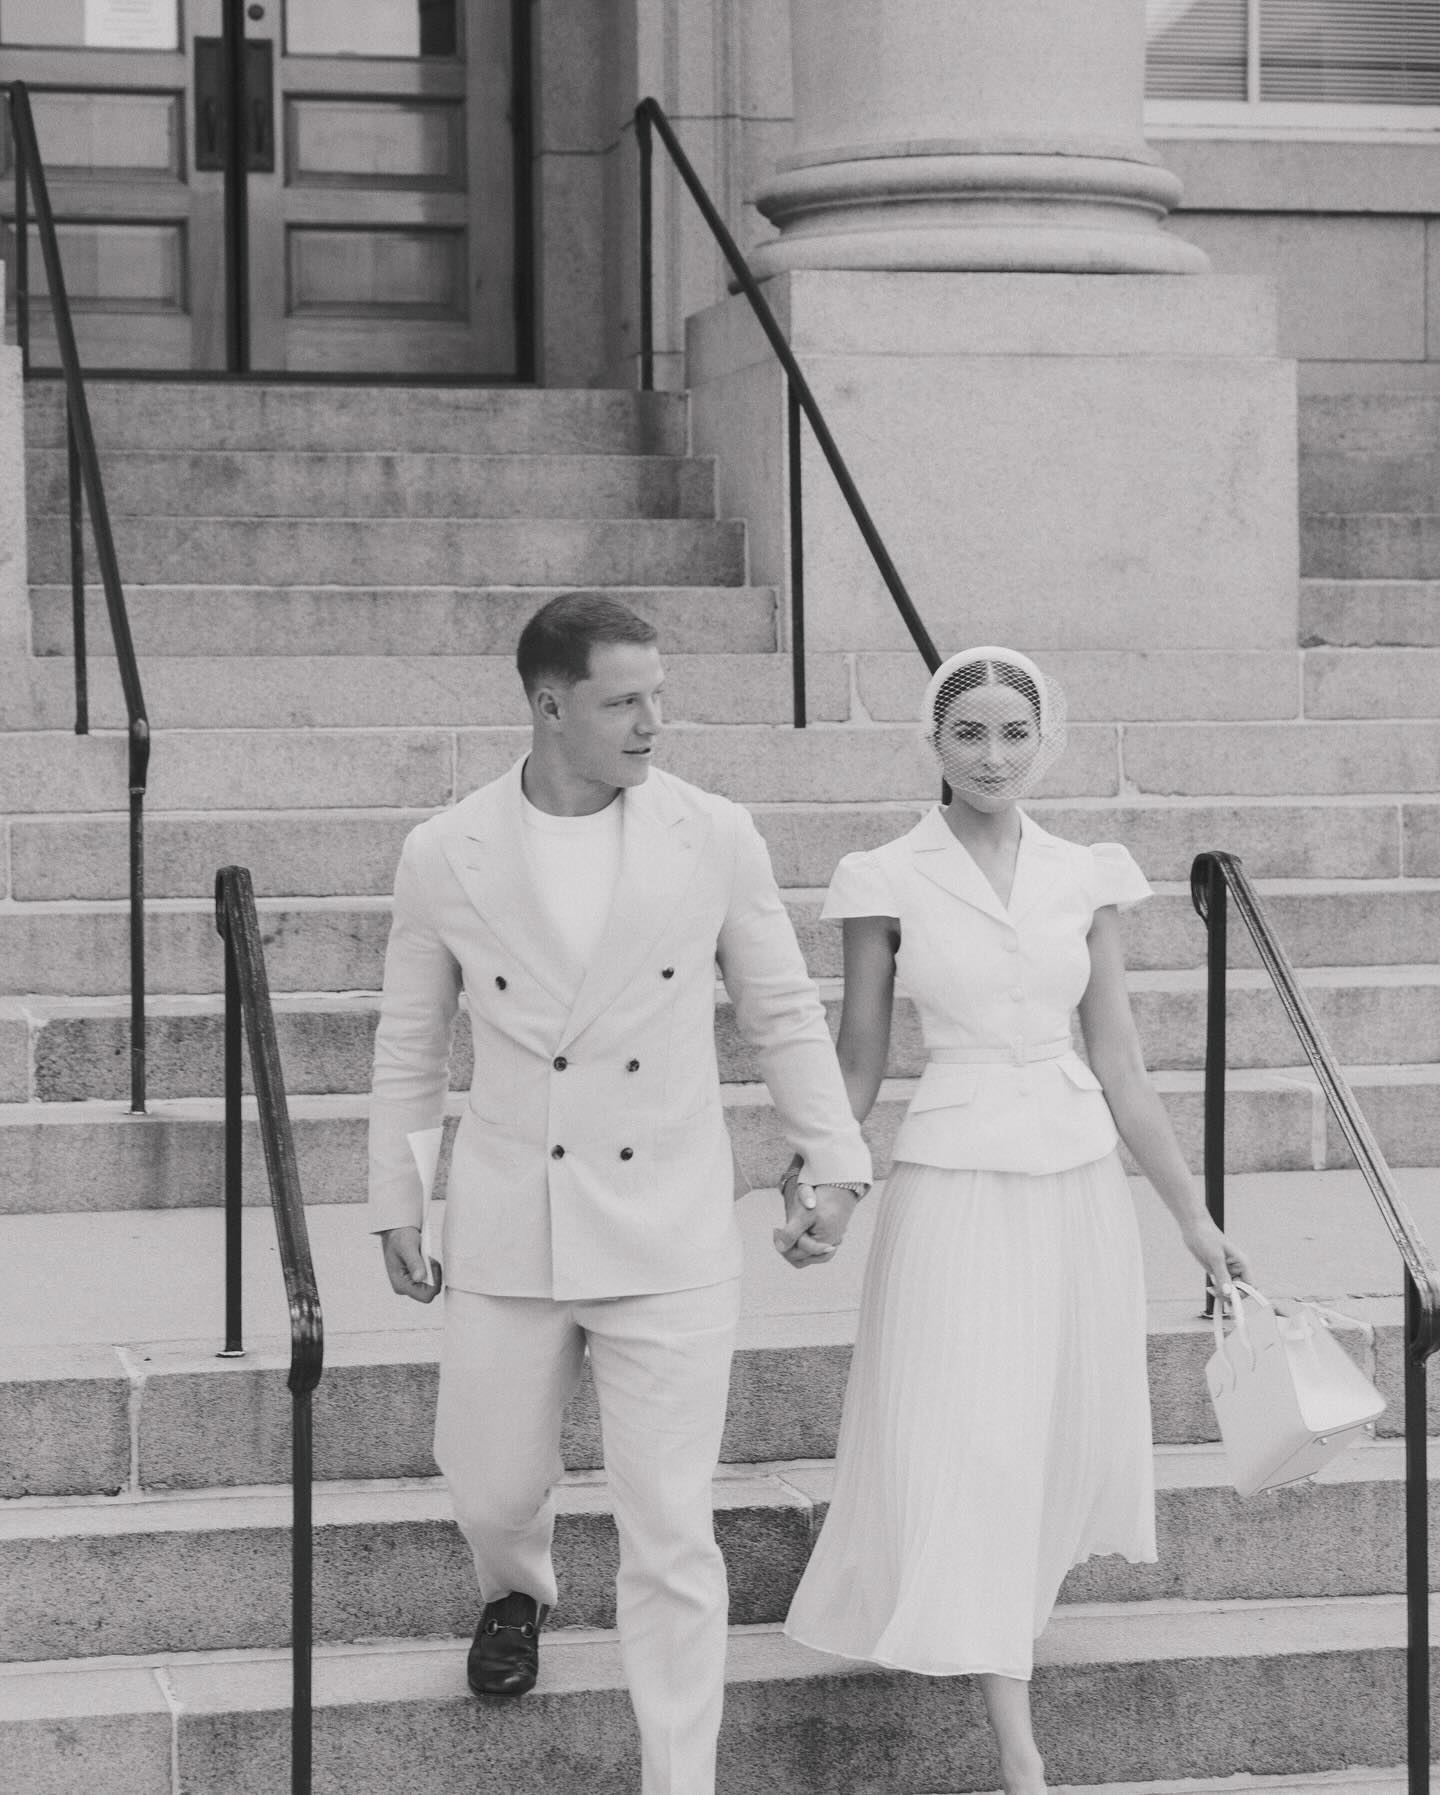 The model and Christian McCaffrey, 28, had a civil service ahead of their lavish wedding in Rhode Island